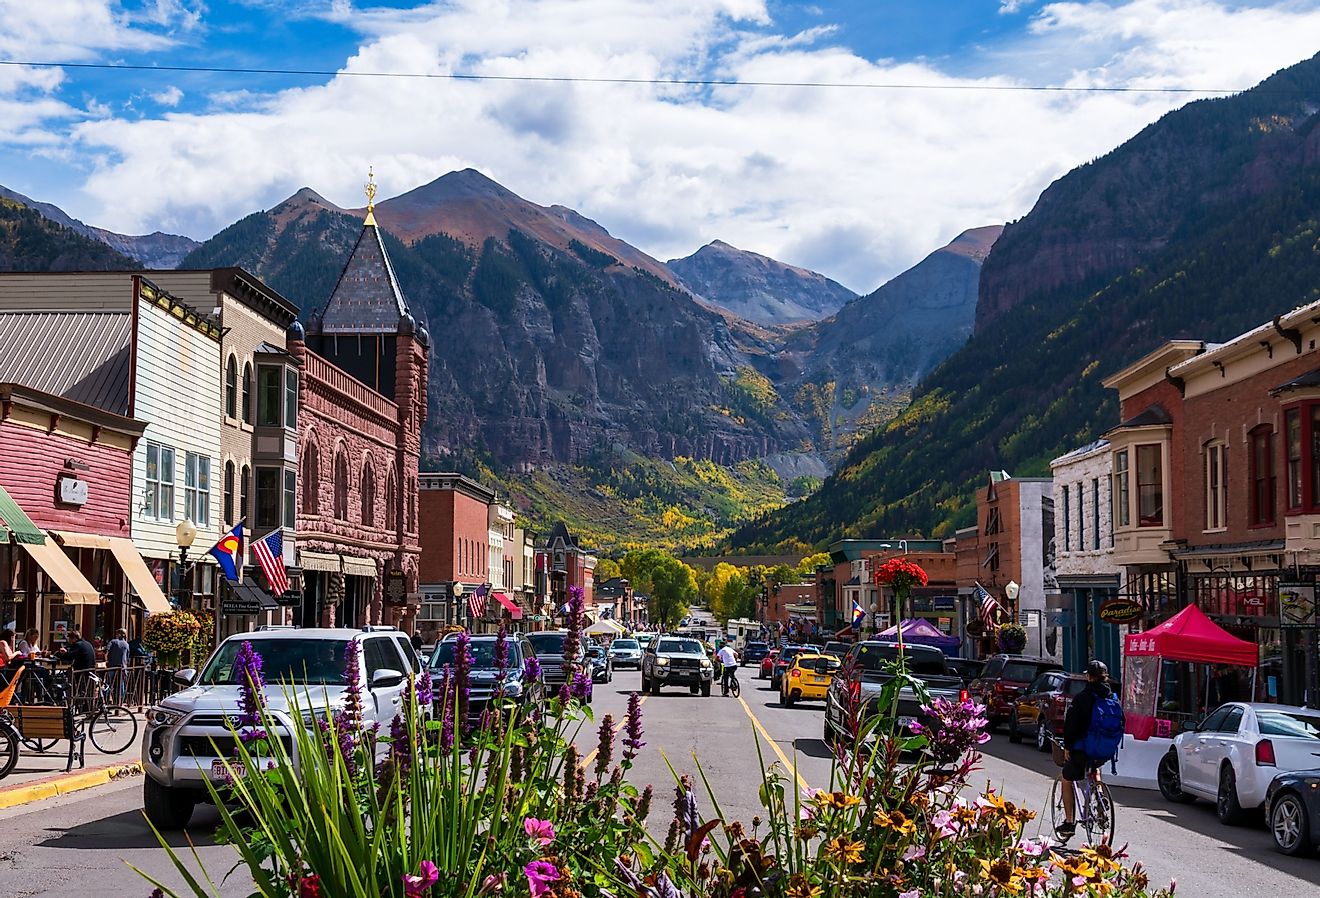 The spectacular town of Telluride, Colorado. Image credit Michael Vi via Shutterstock